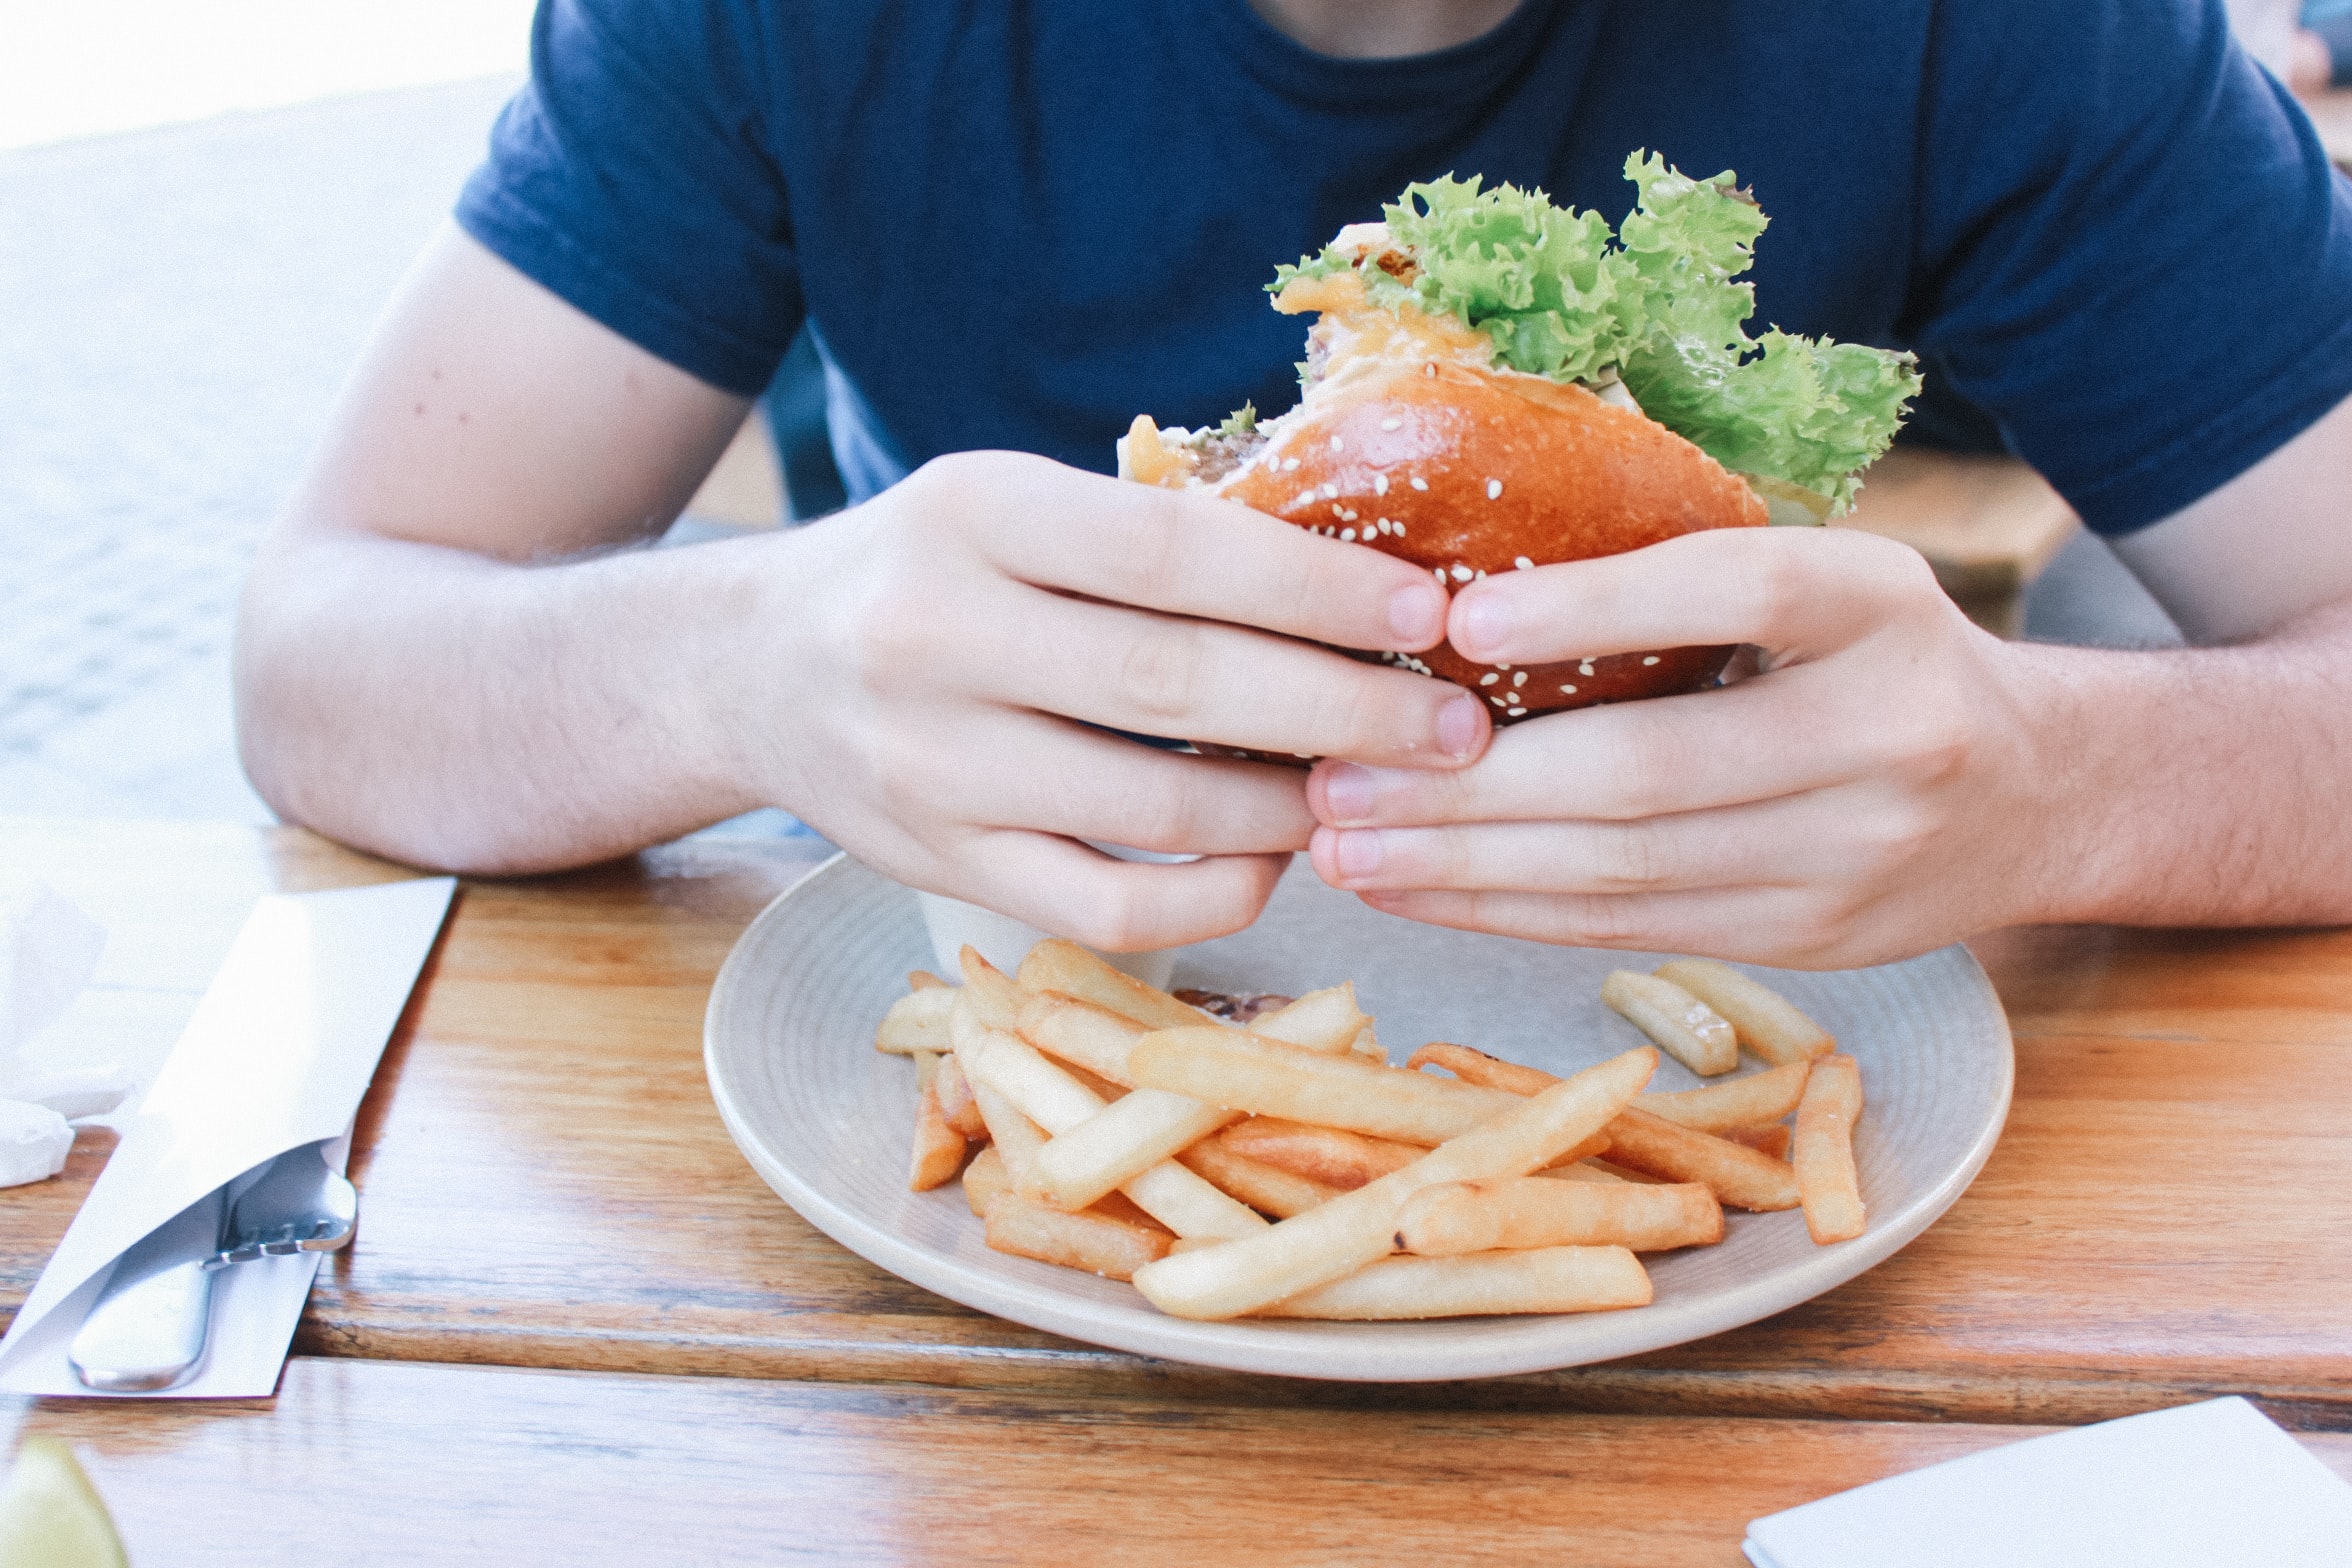 Restaurants vs. retail: Breaking down consumers’ plant-based appetites